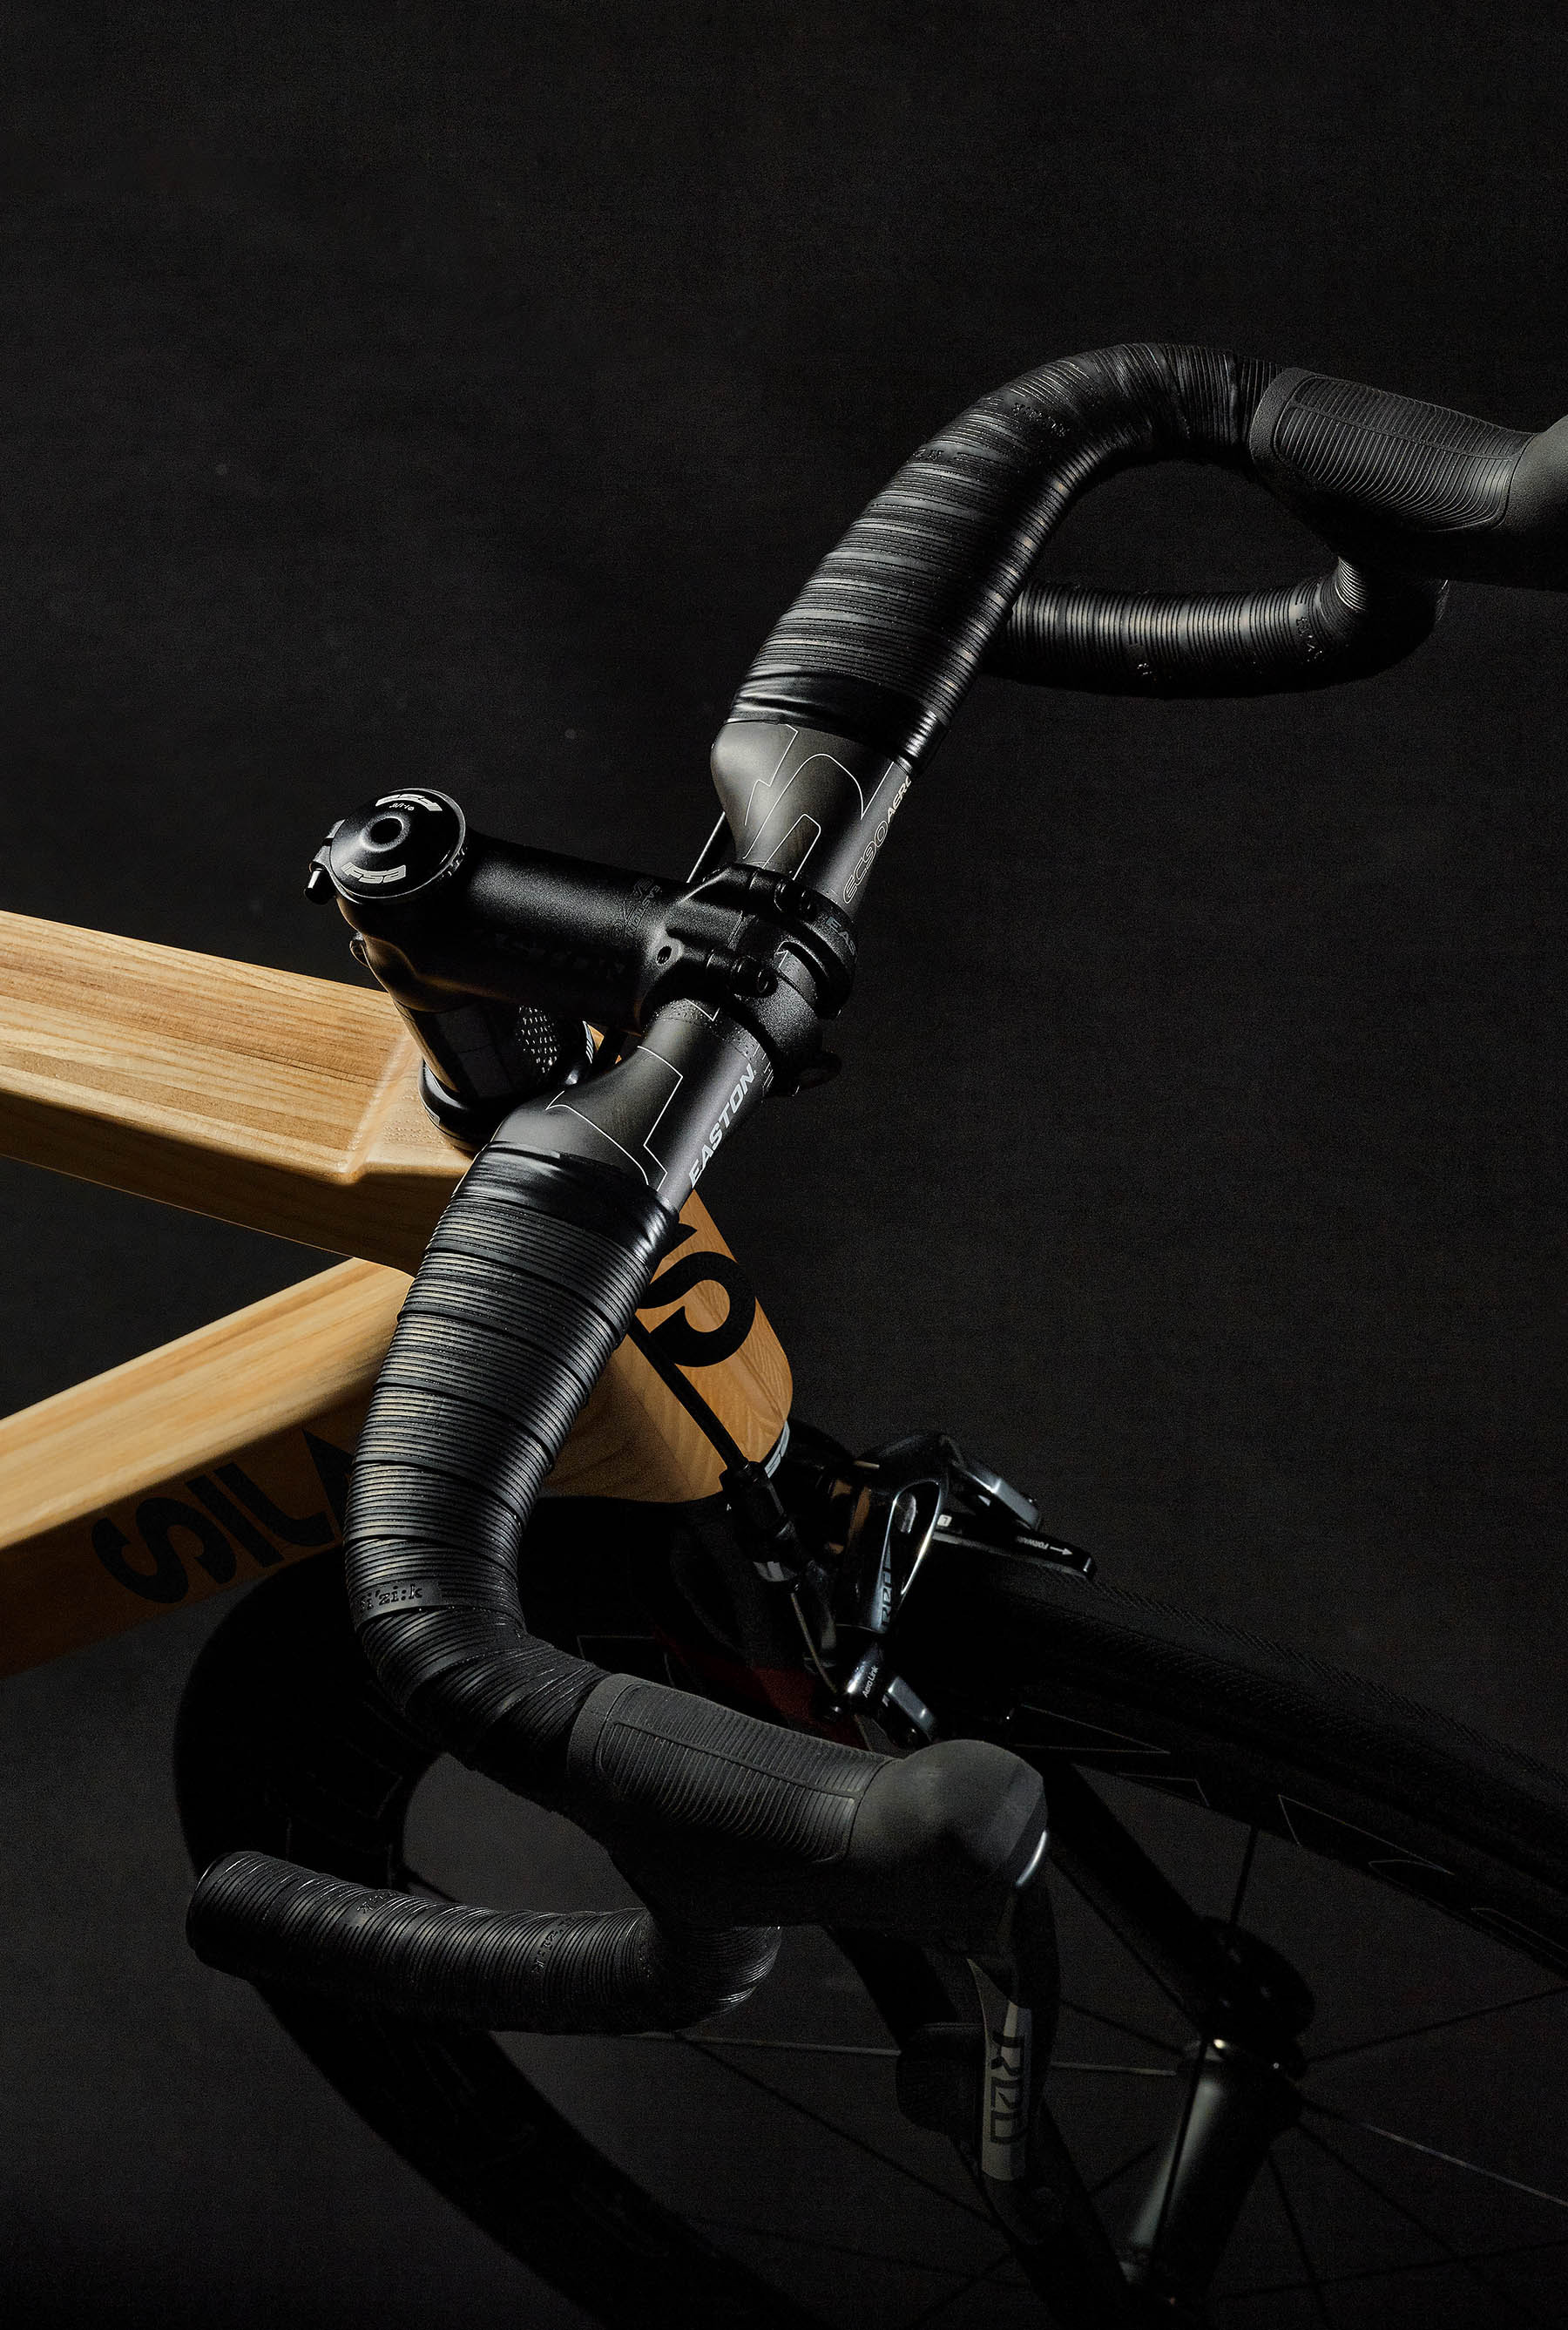 Topview of SILA wooden road bike's handles